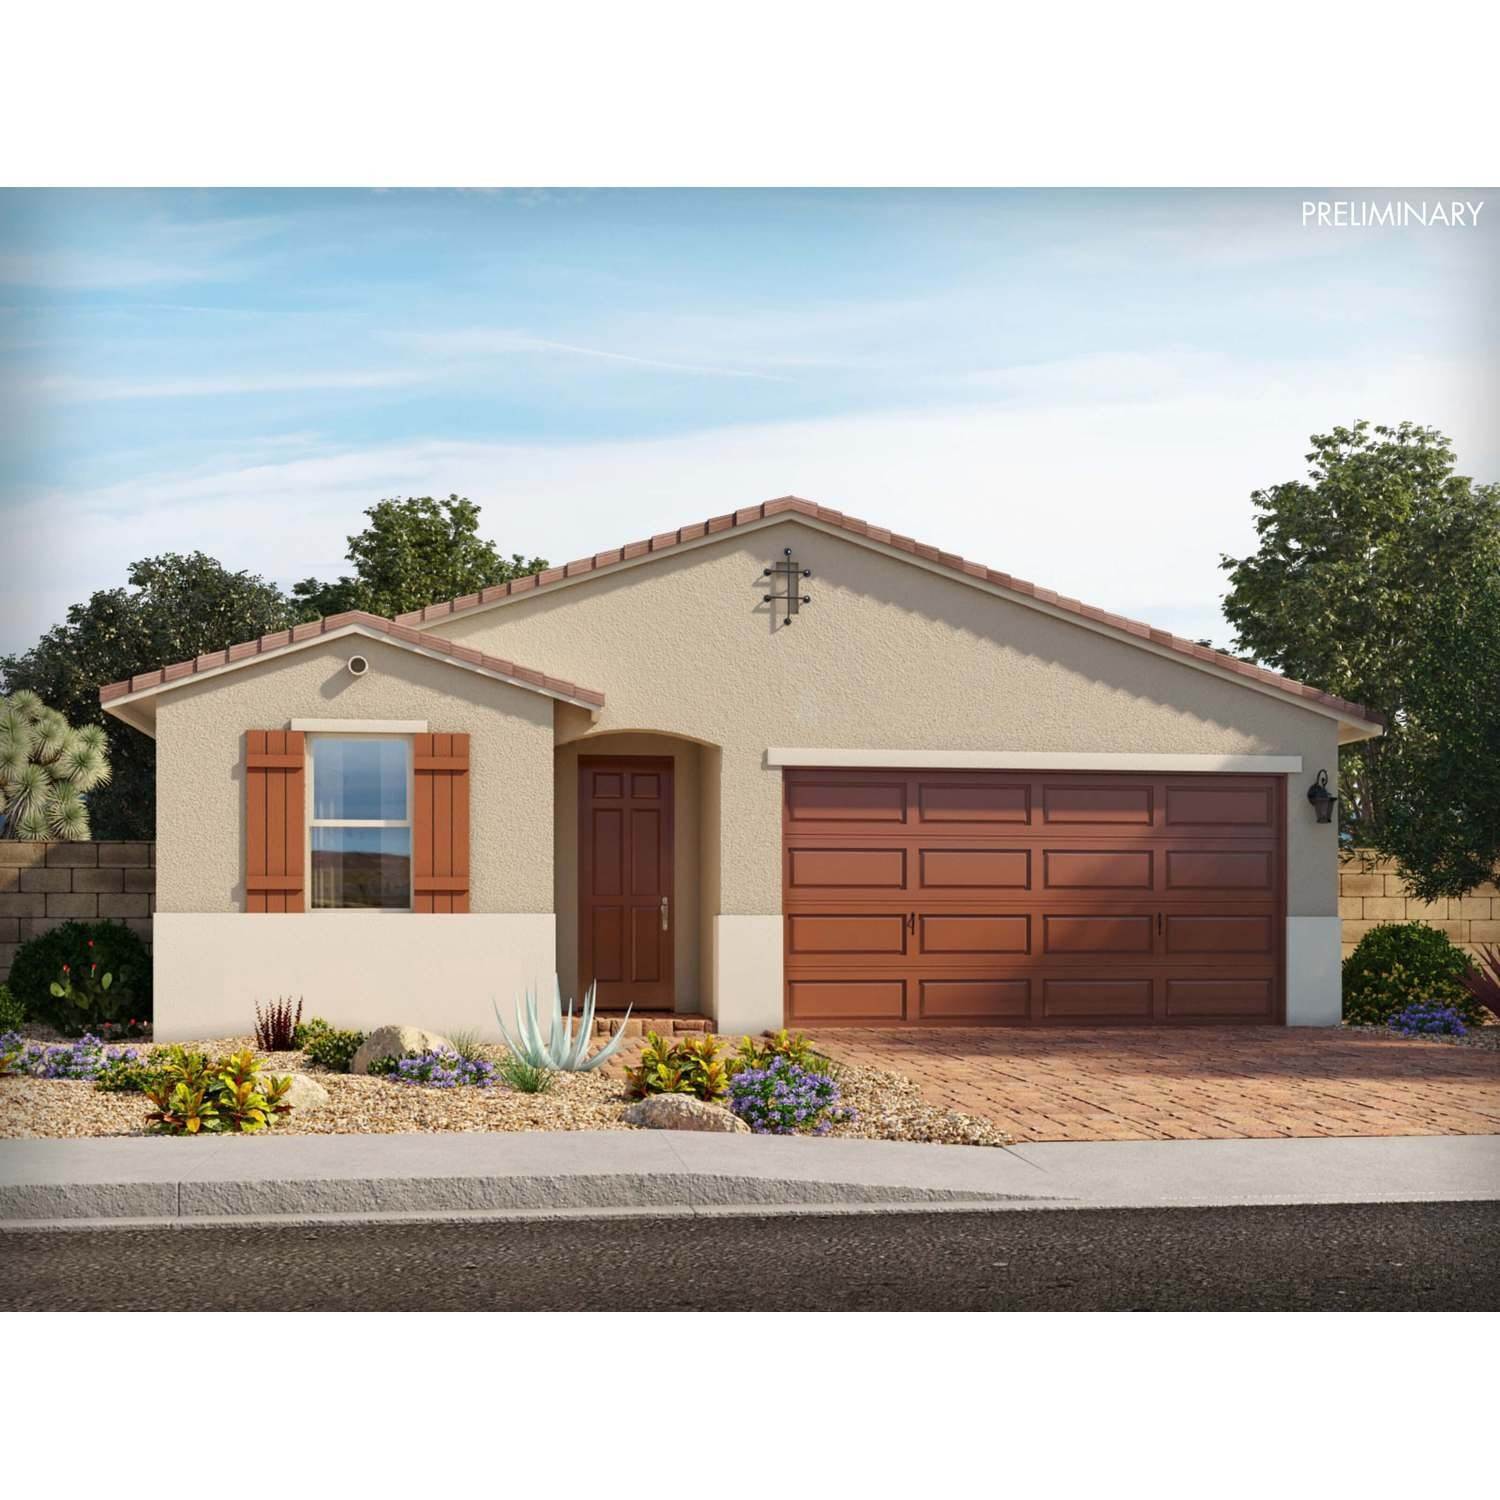 22. Bella Vista Farms - Estate Series xây dựng tại 3563 E Jasmine Way, San Tan Valley, AZ 85143